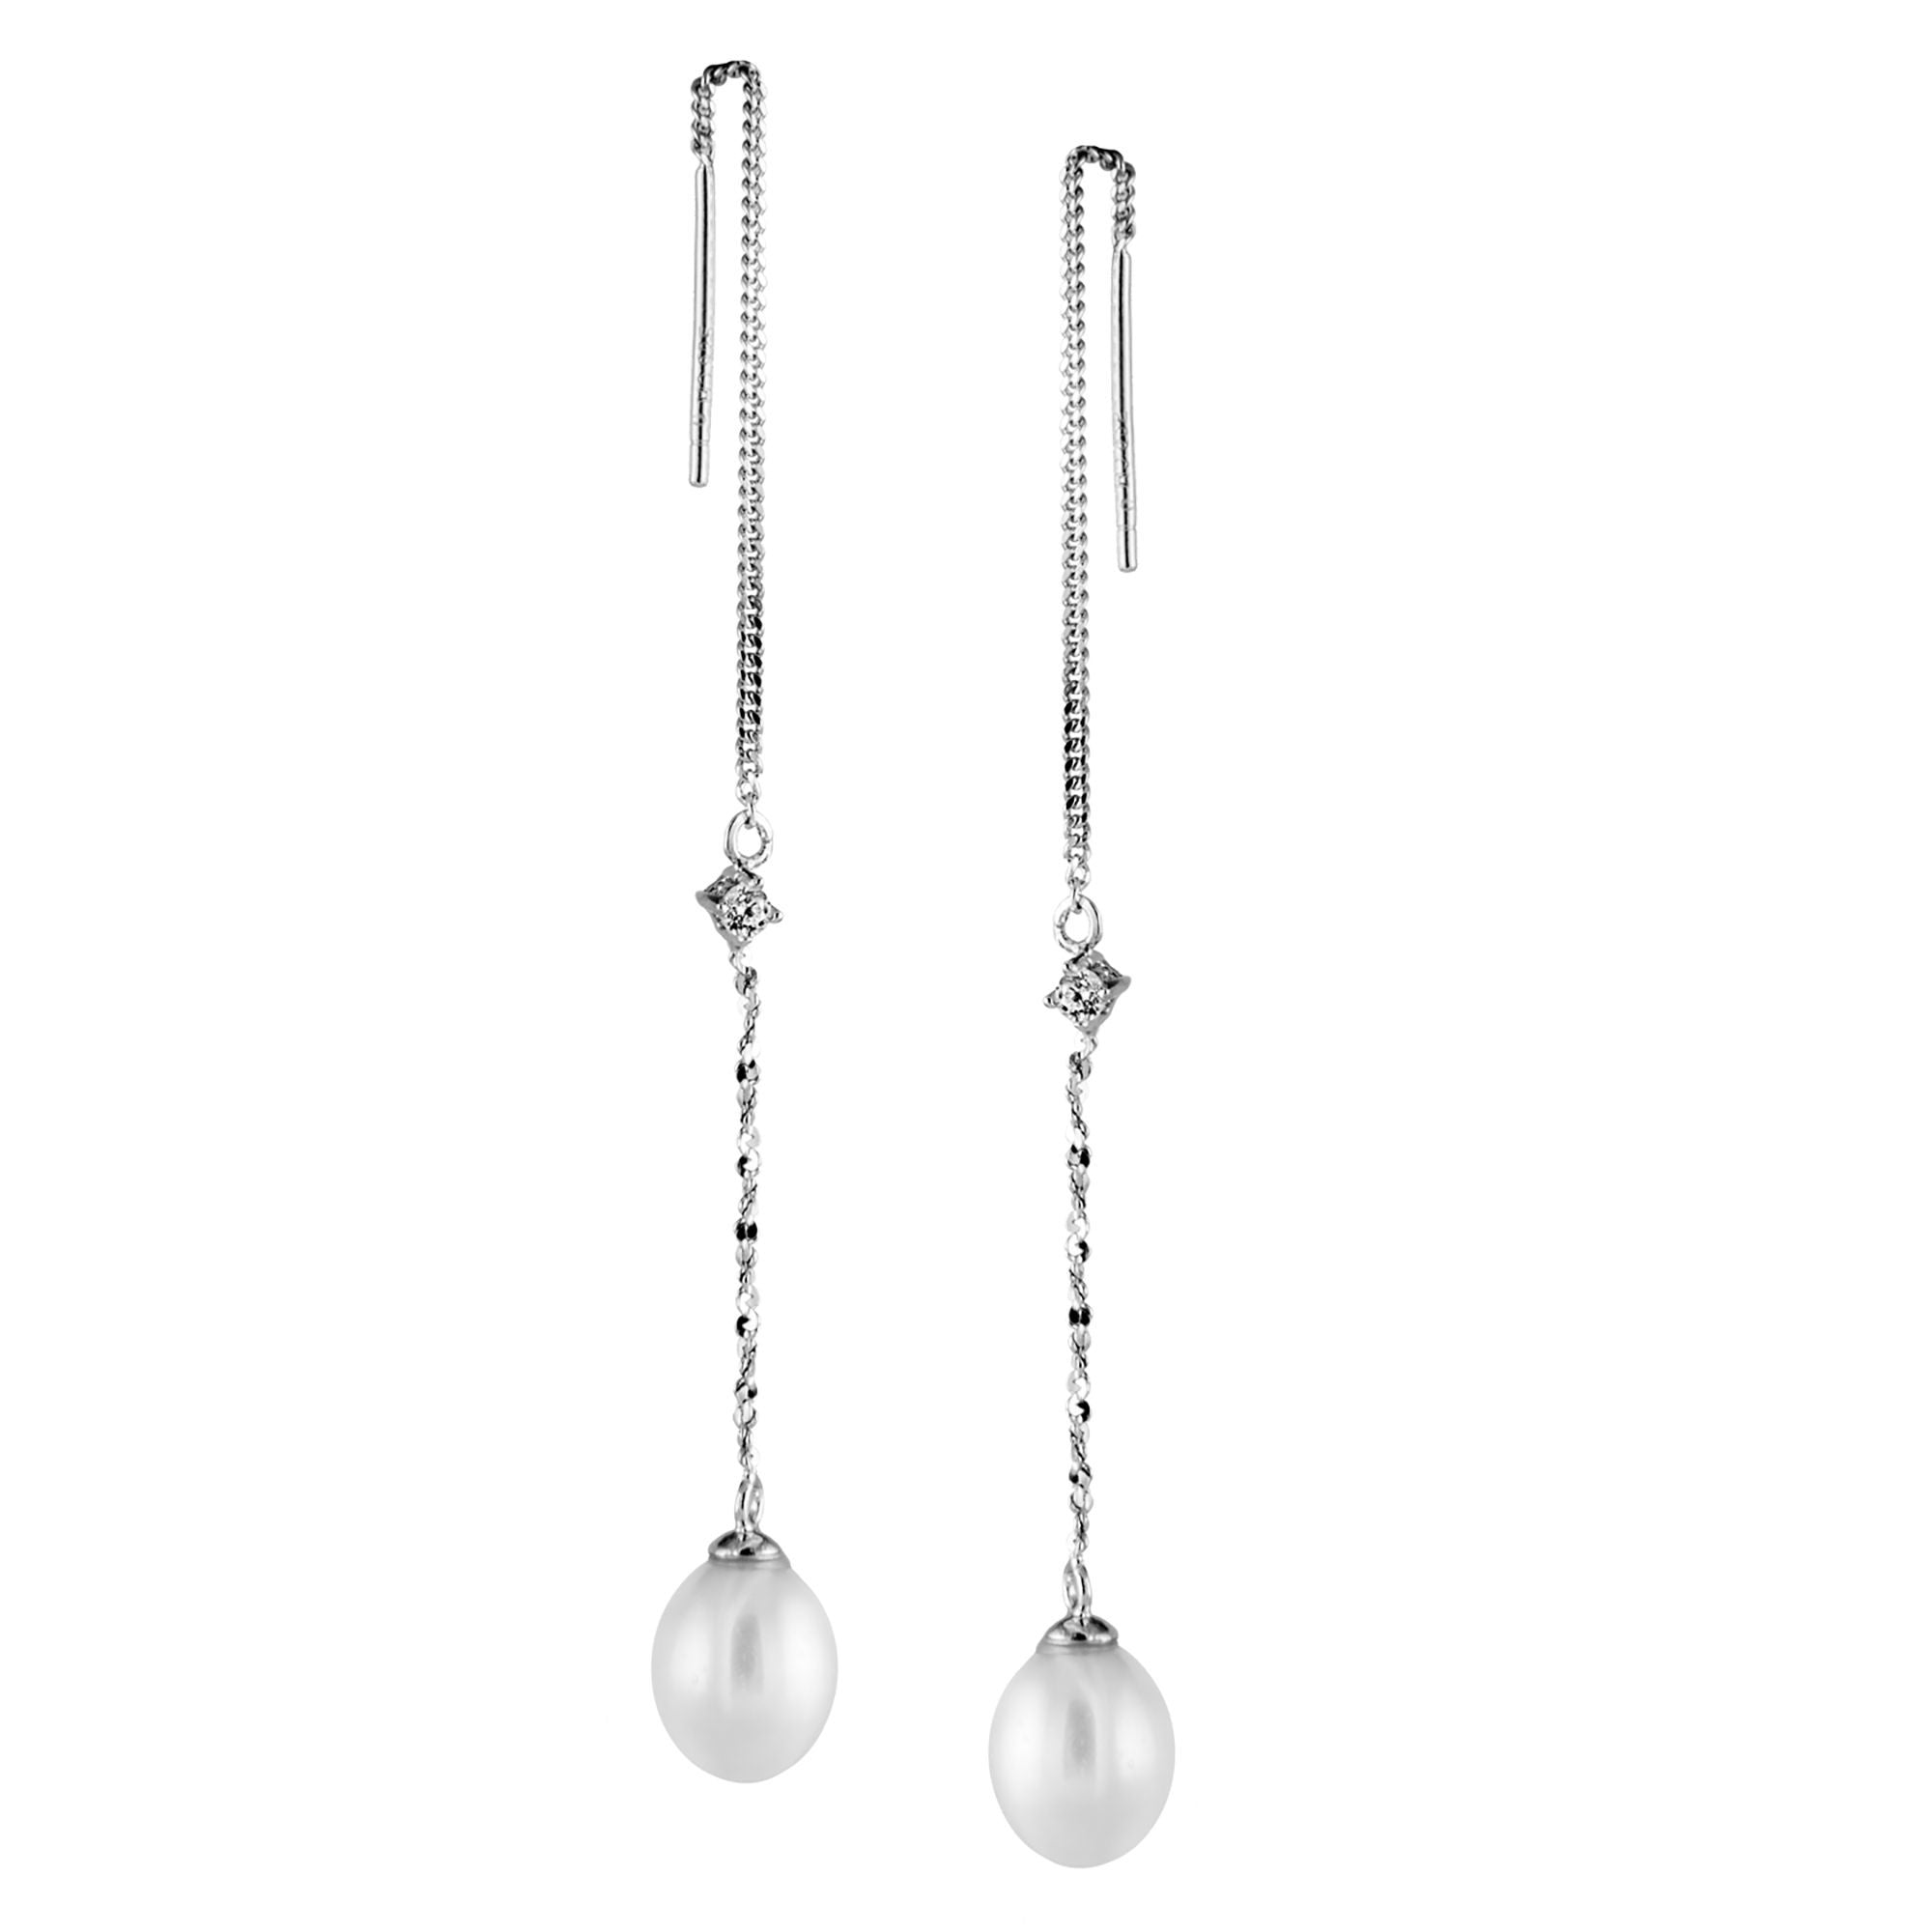 title:Splendid Pearls Sterling Silver Pearl Earrings ESR-426;color:White